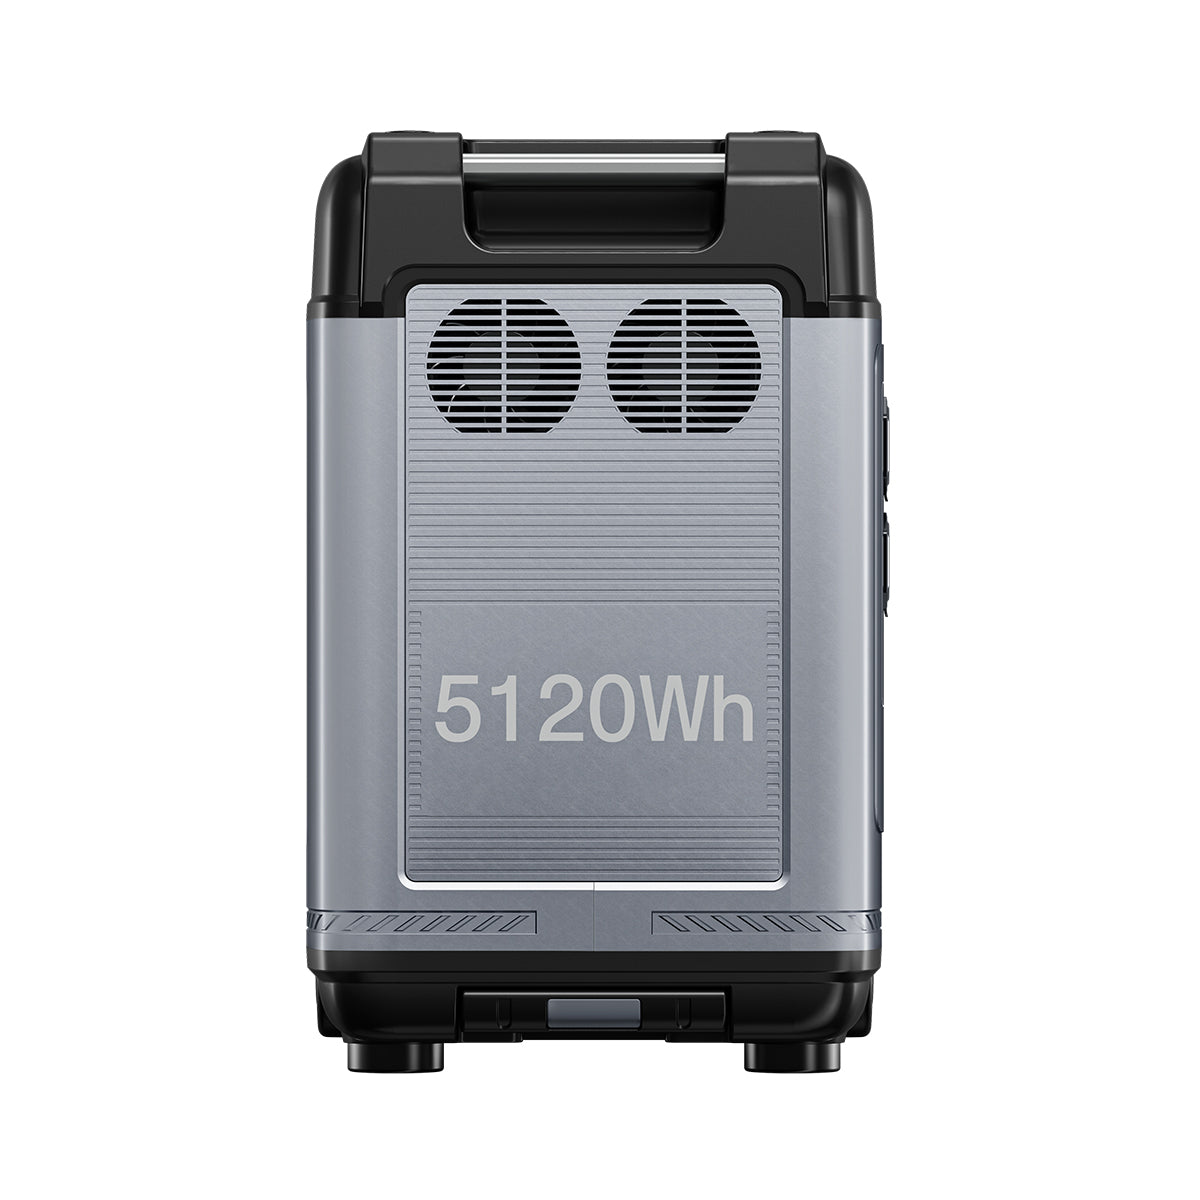 OUKITEL P5000 Home Battery Backup